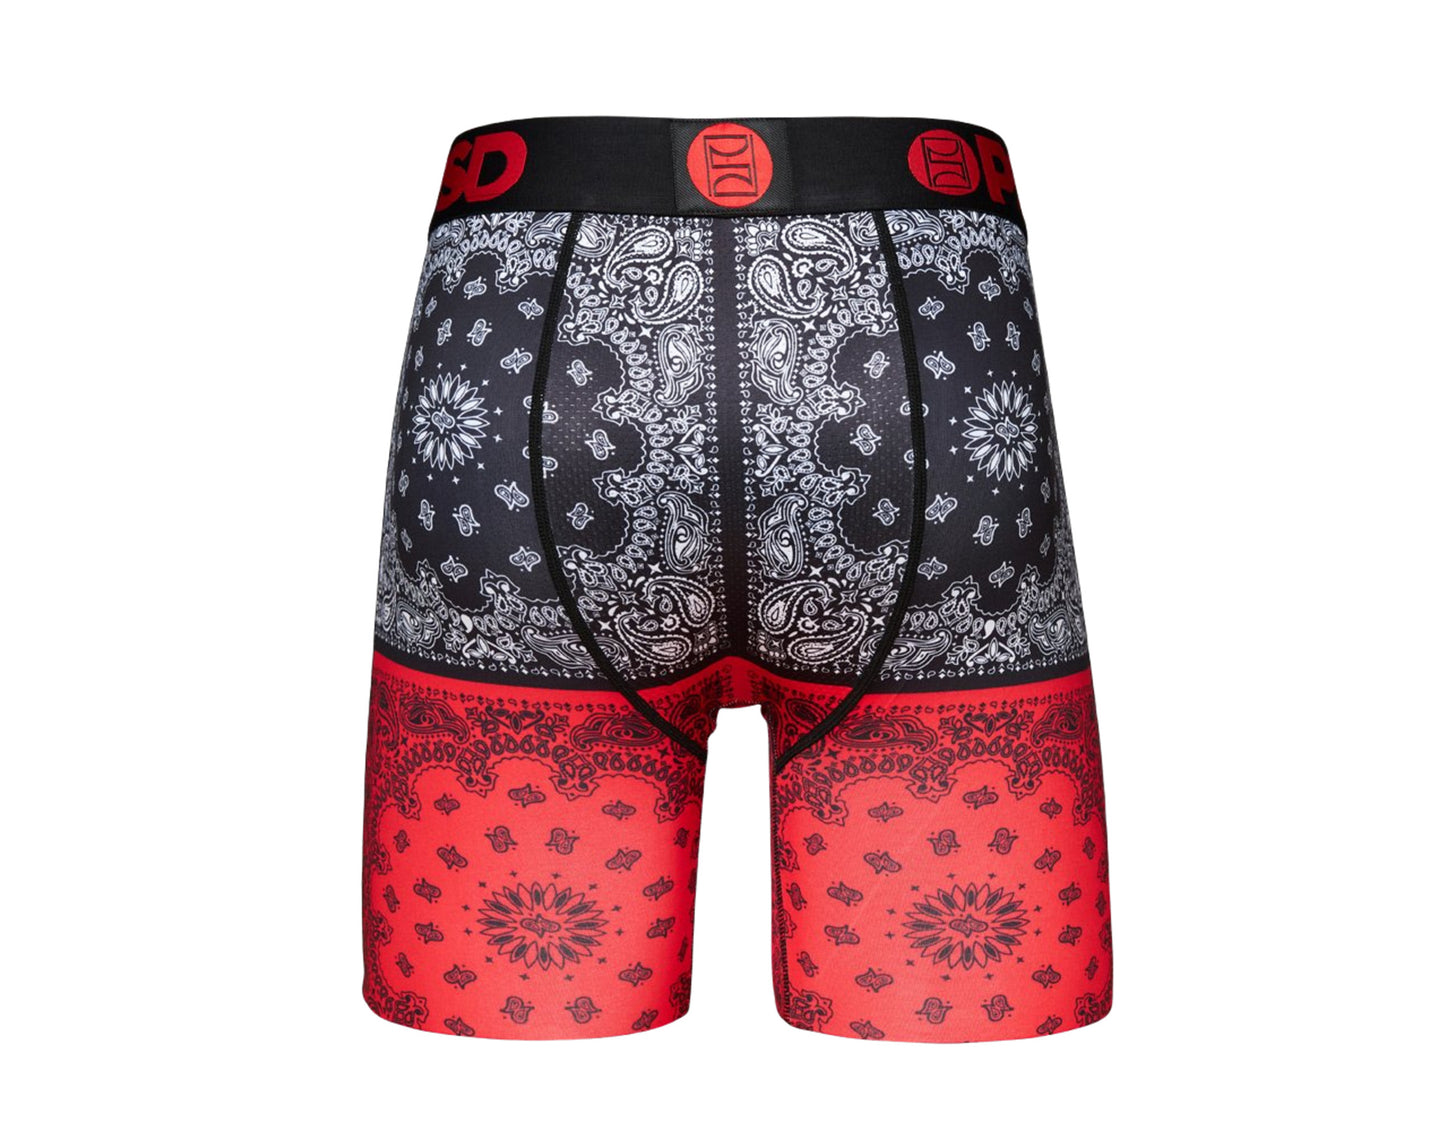 PSD Bandana Split Boxer Briefs Men's Underwear